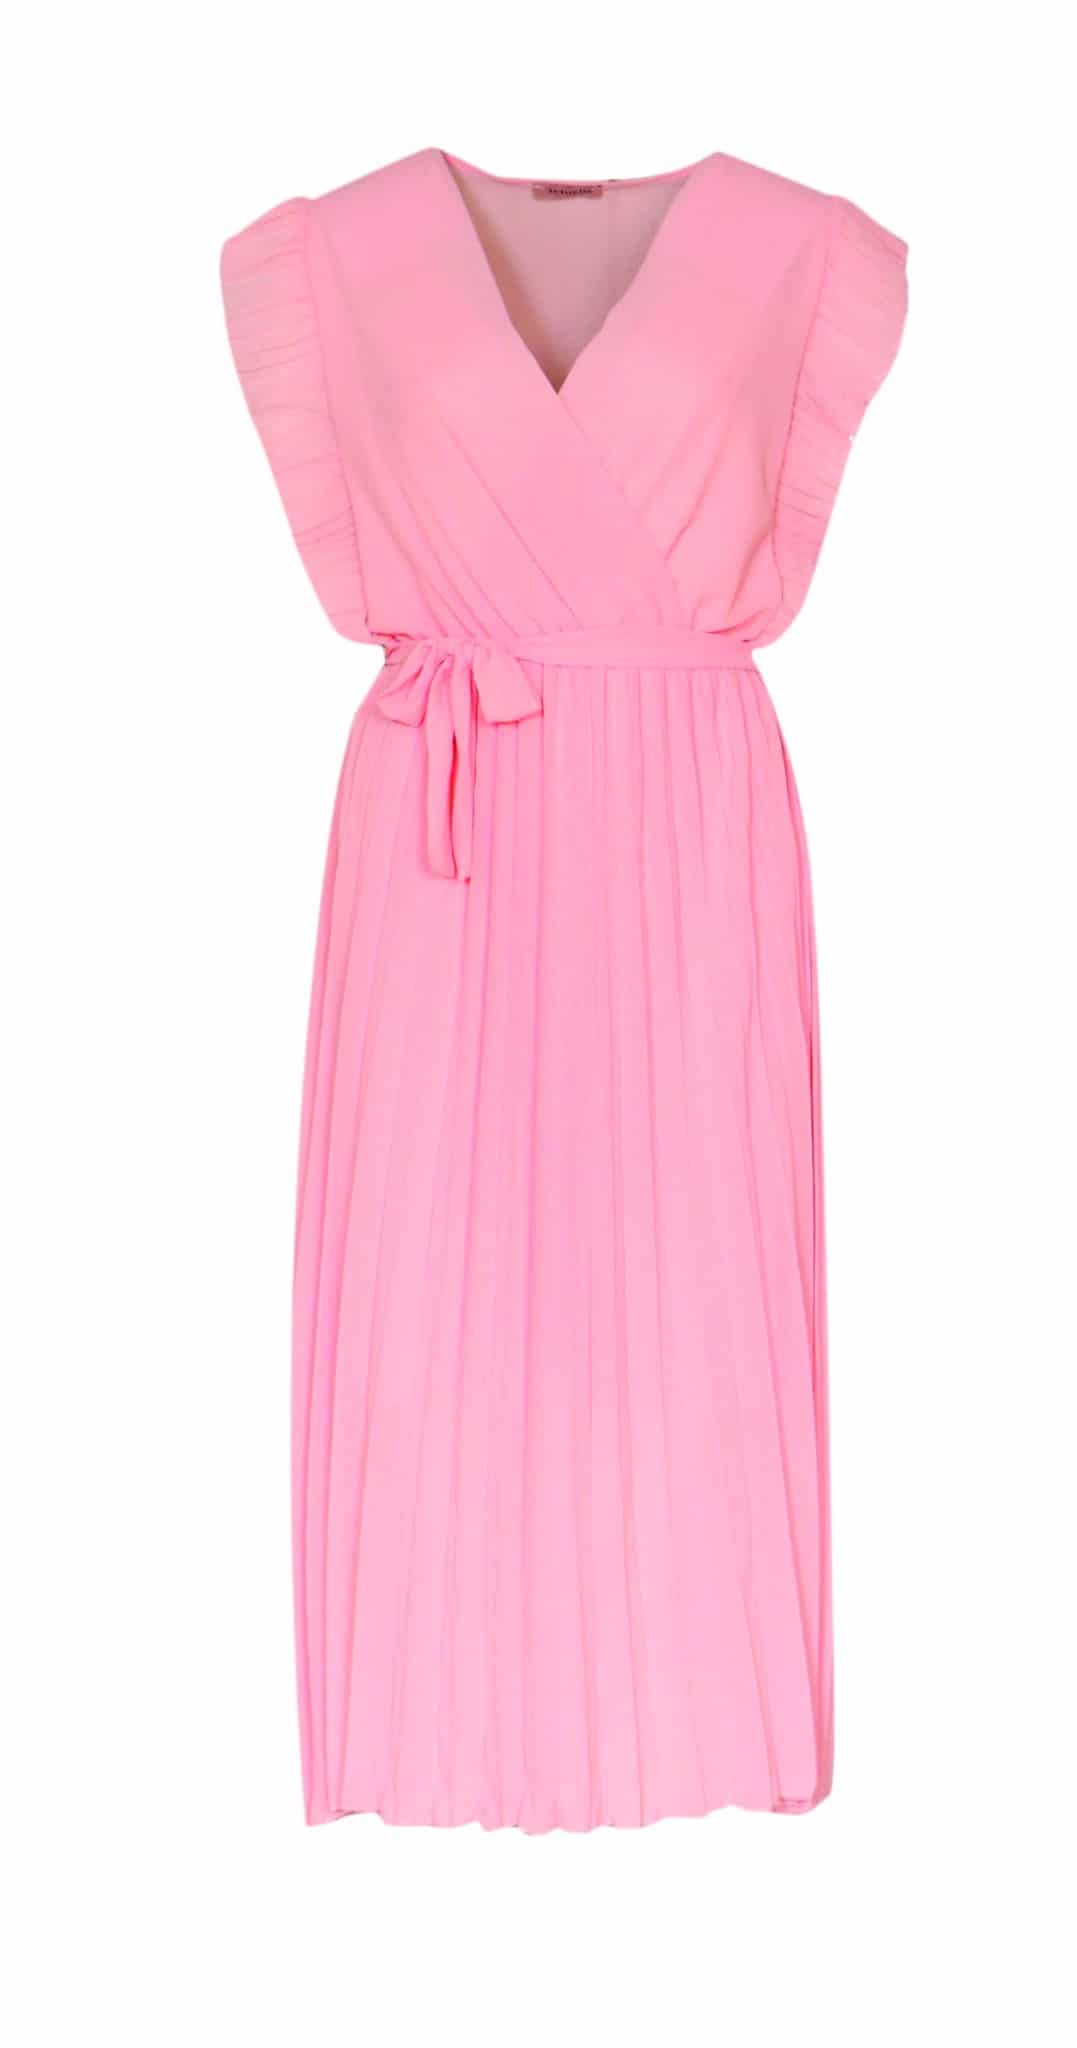 robe midi rose col V emmanches volants bas plissé photo buste